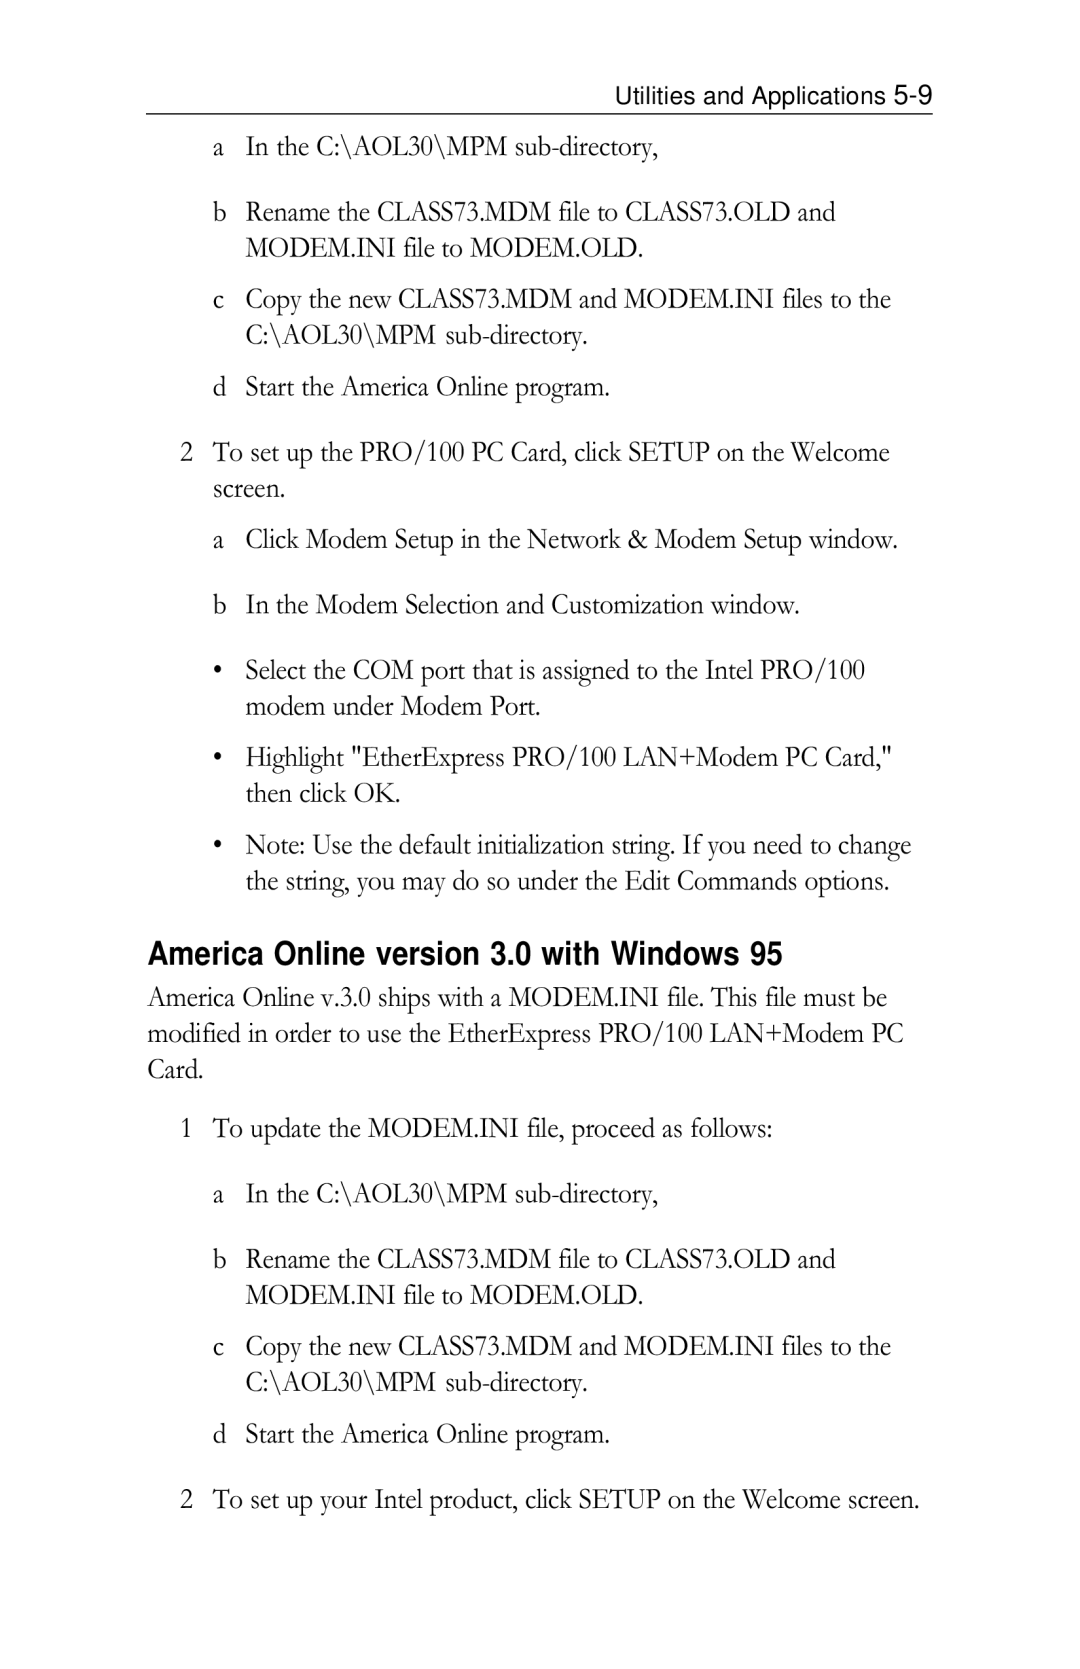 Intel PRO/100 appendix America Online version 3.0 with Windows, C\AOL30\MPM sub-directory 